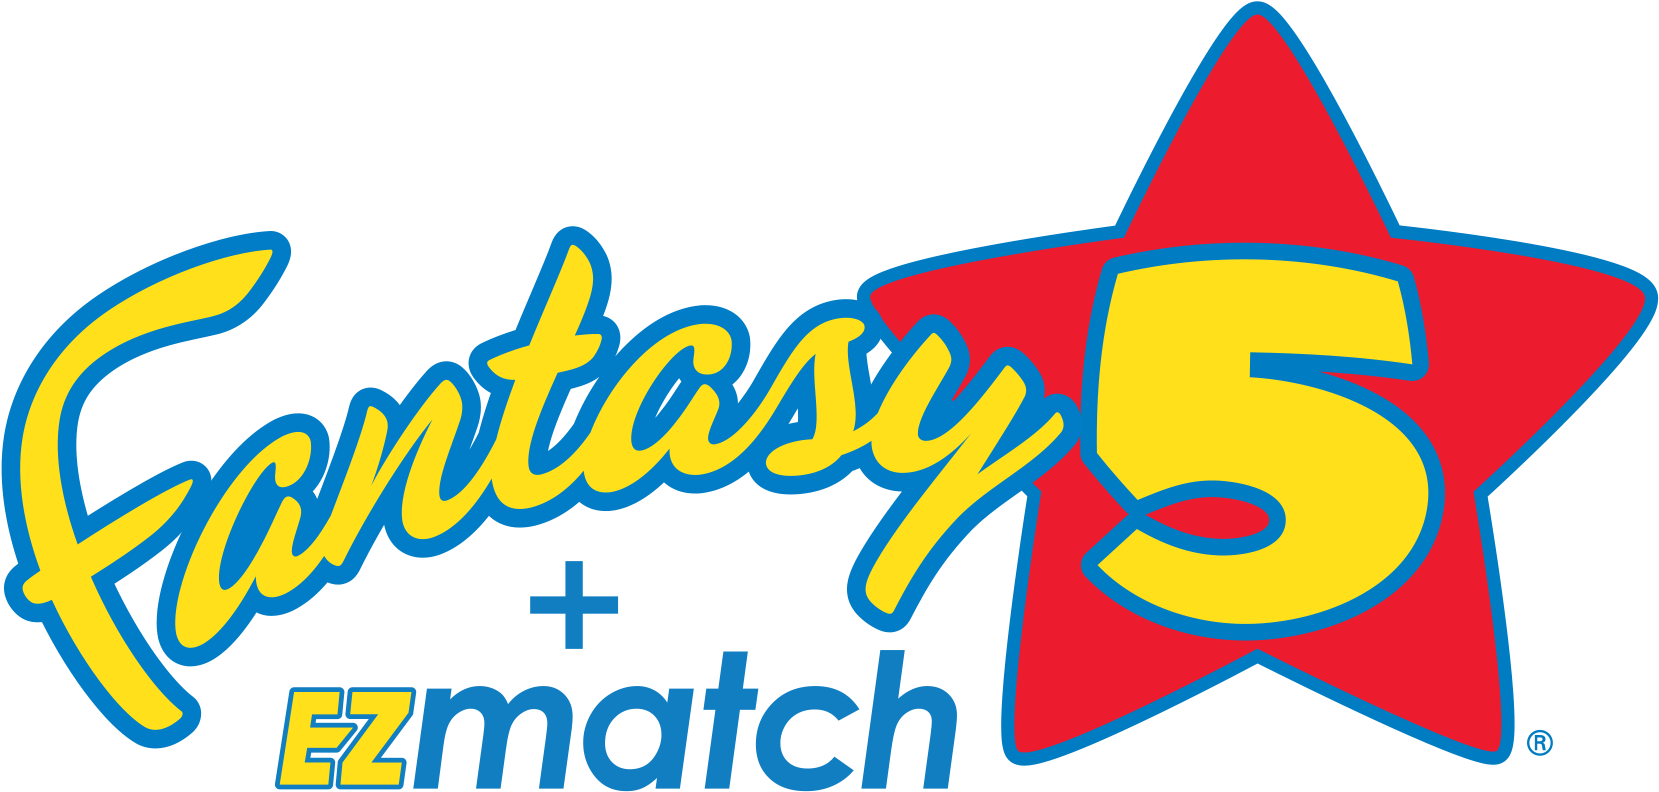 Fantasy5 Lottery Logo PNG image